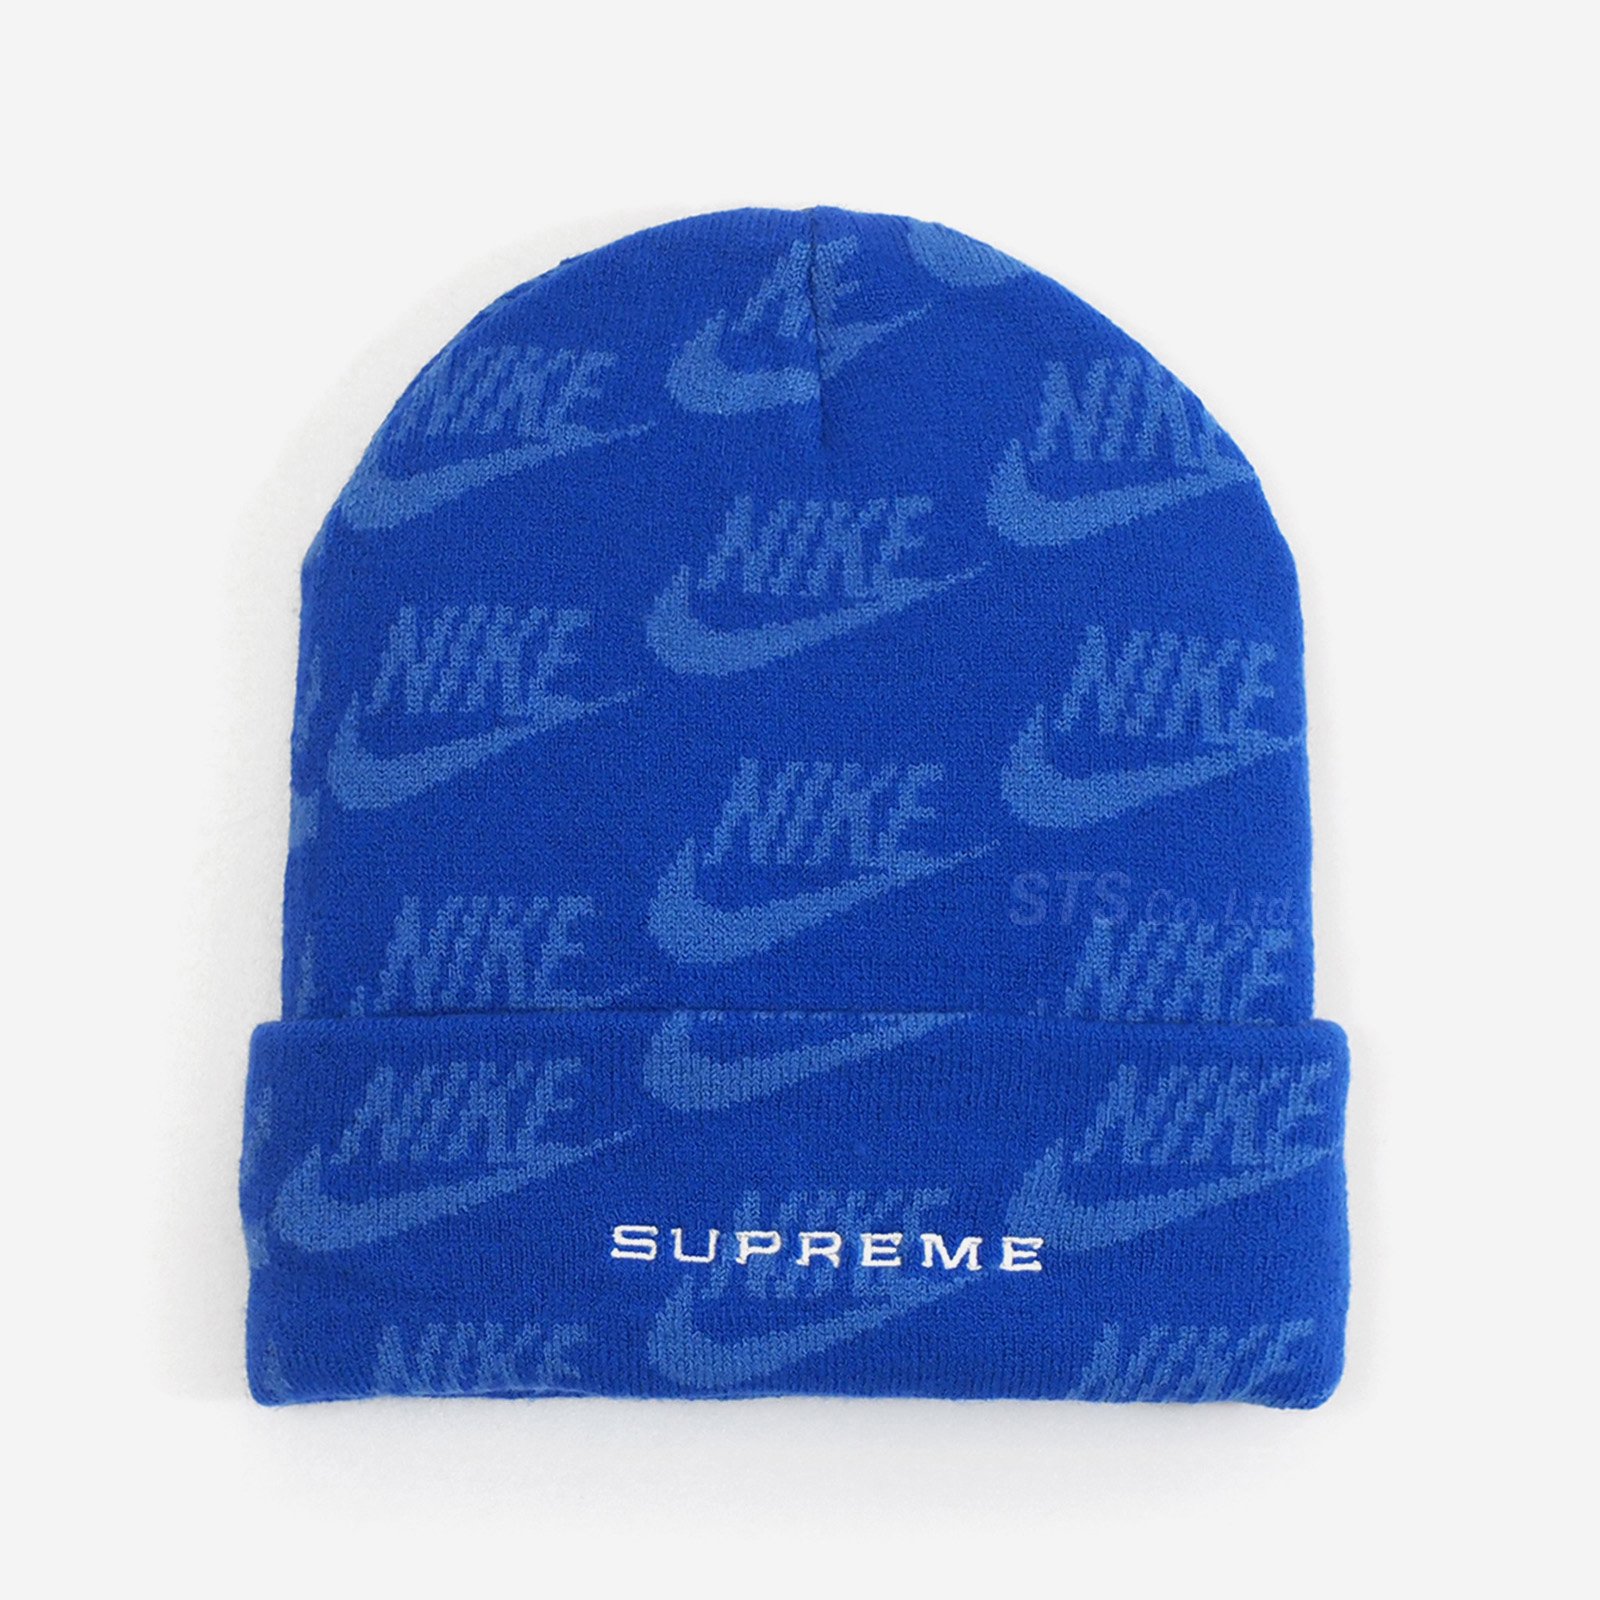 Supreme/Nike Jacquard Logos Beanie